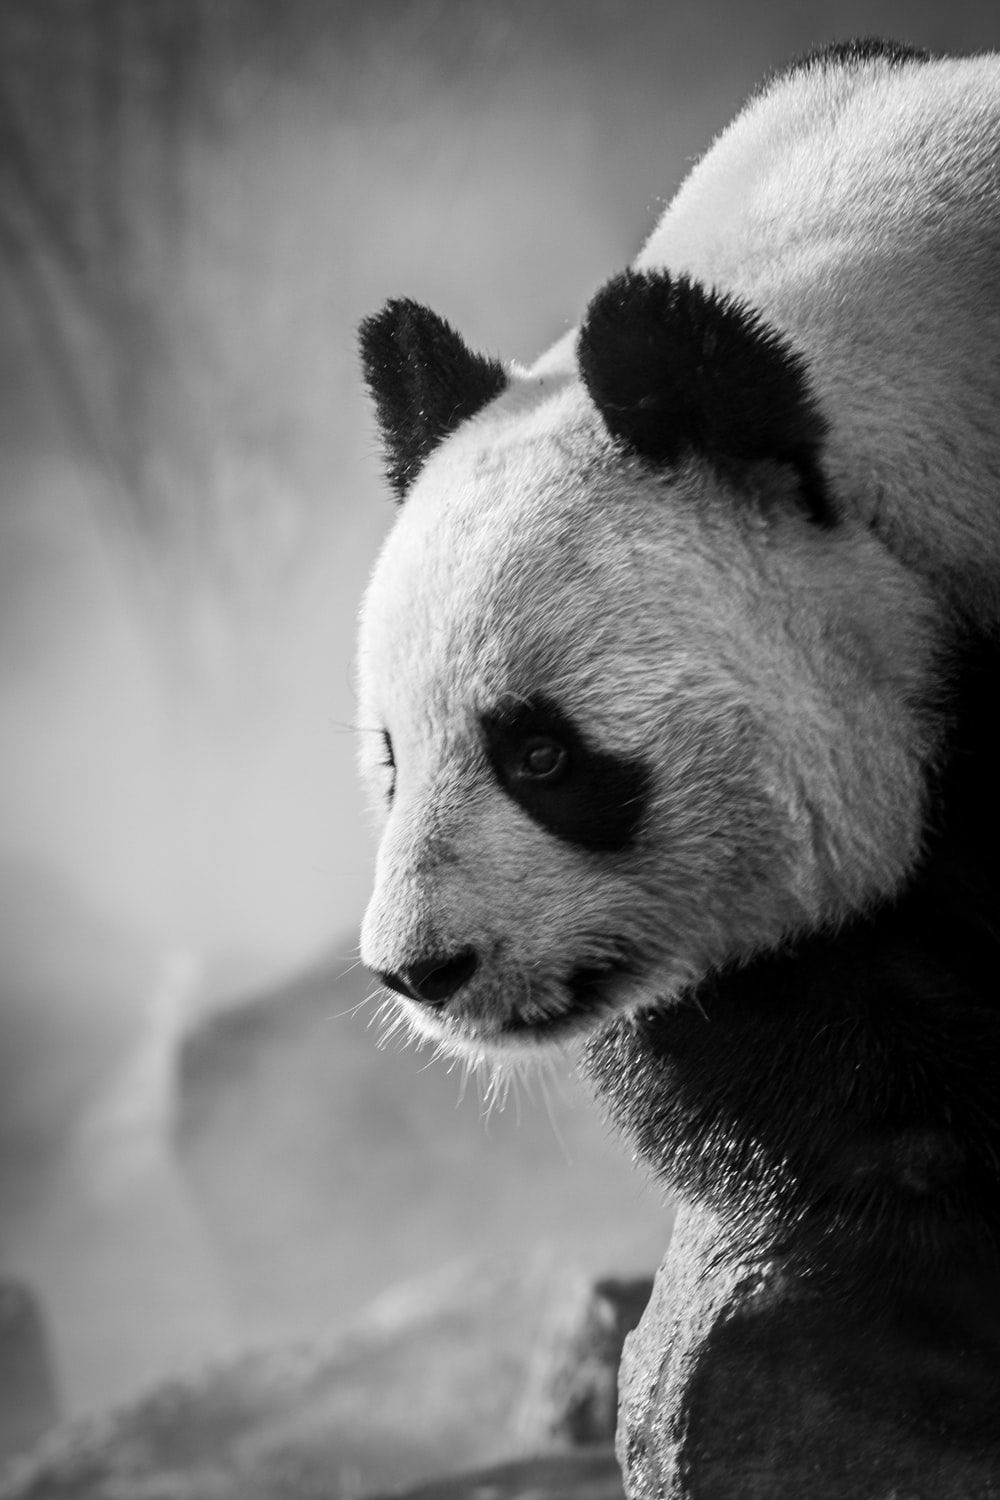 grayscale photo of panda on tree branch photo